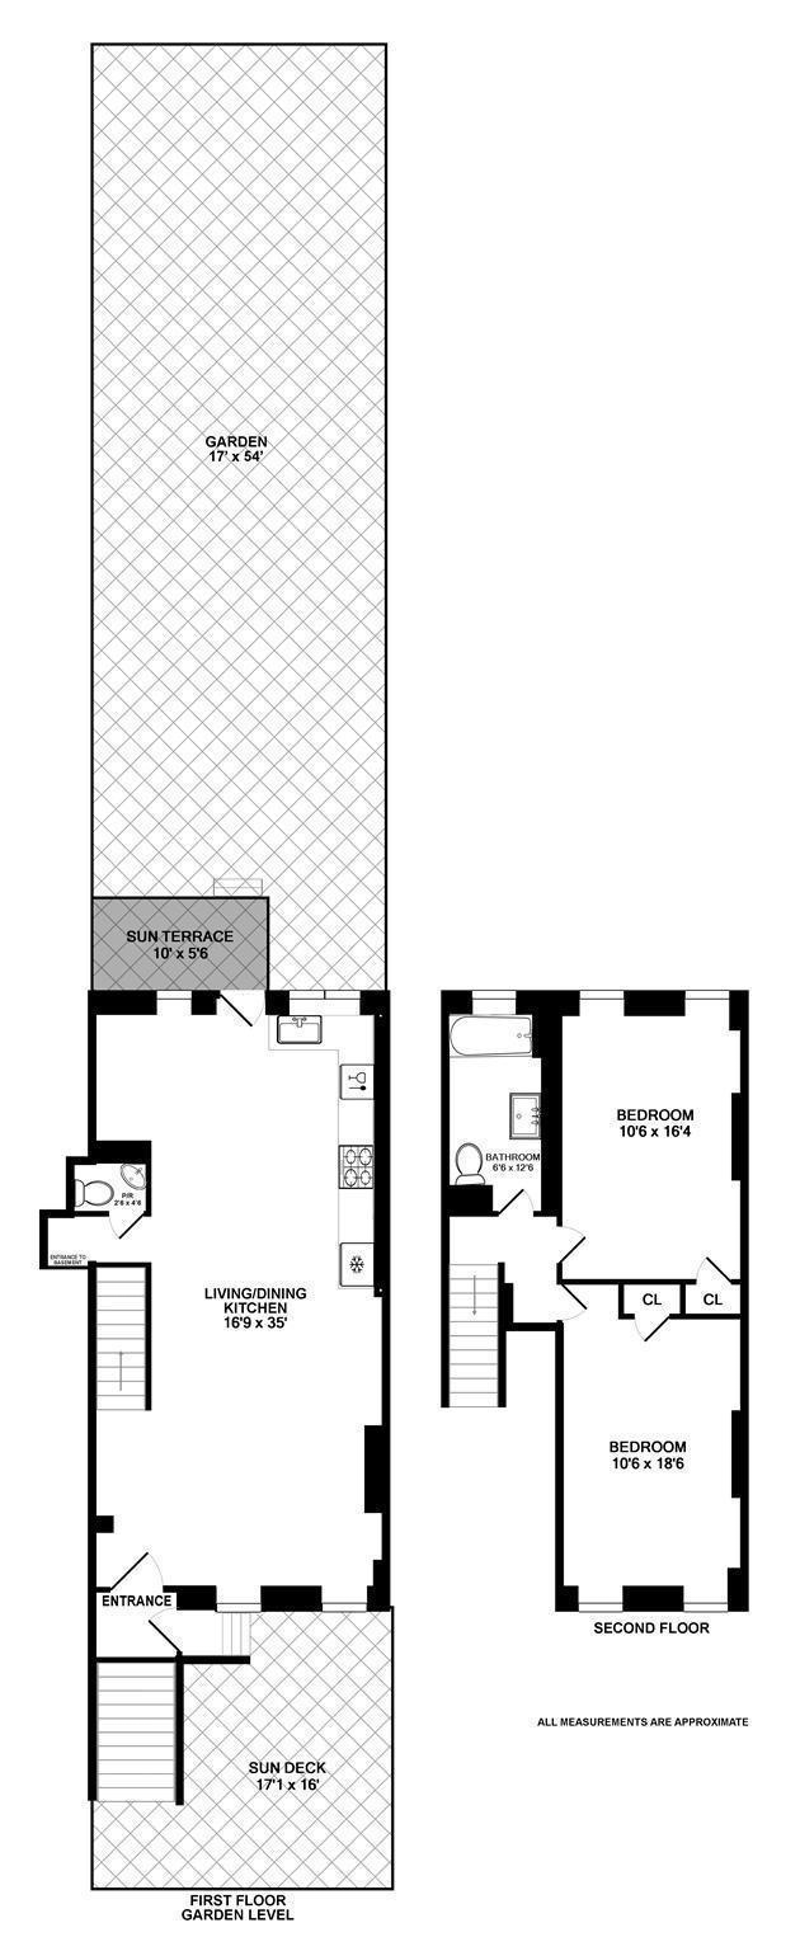 Floorplan for 447 Degraw Street, GARDEN